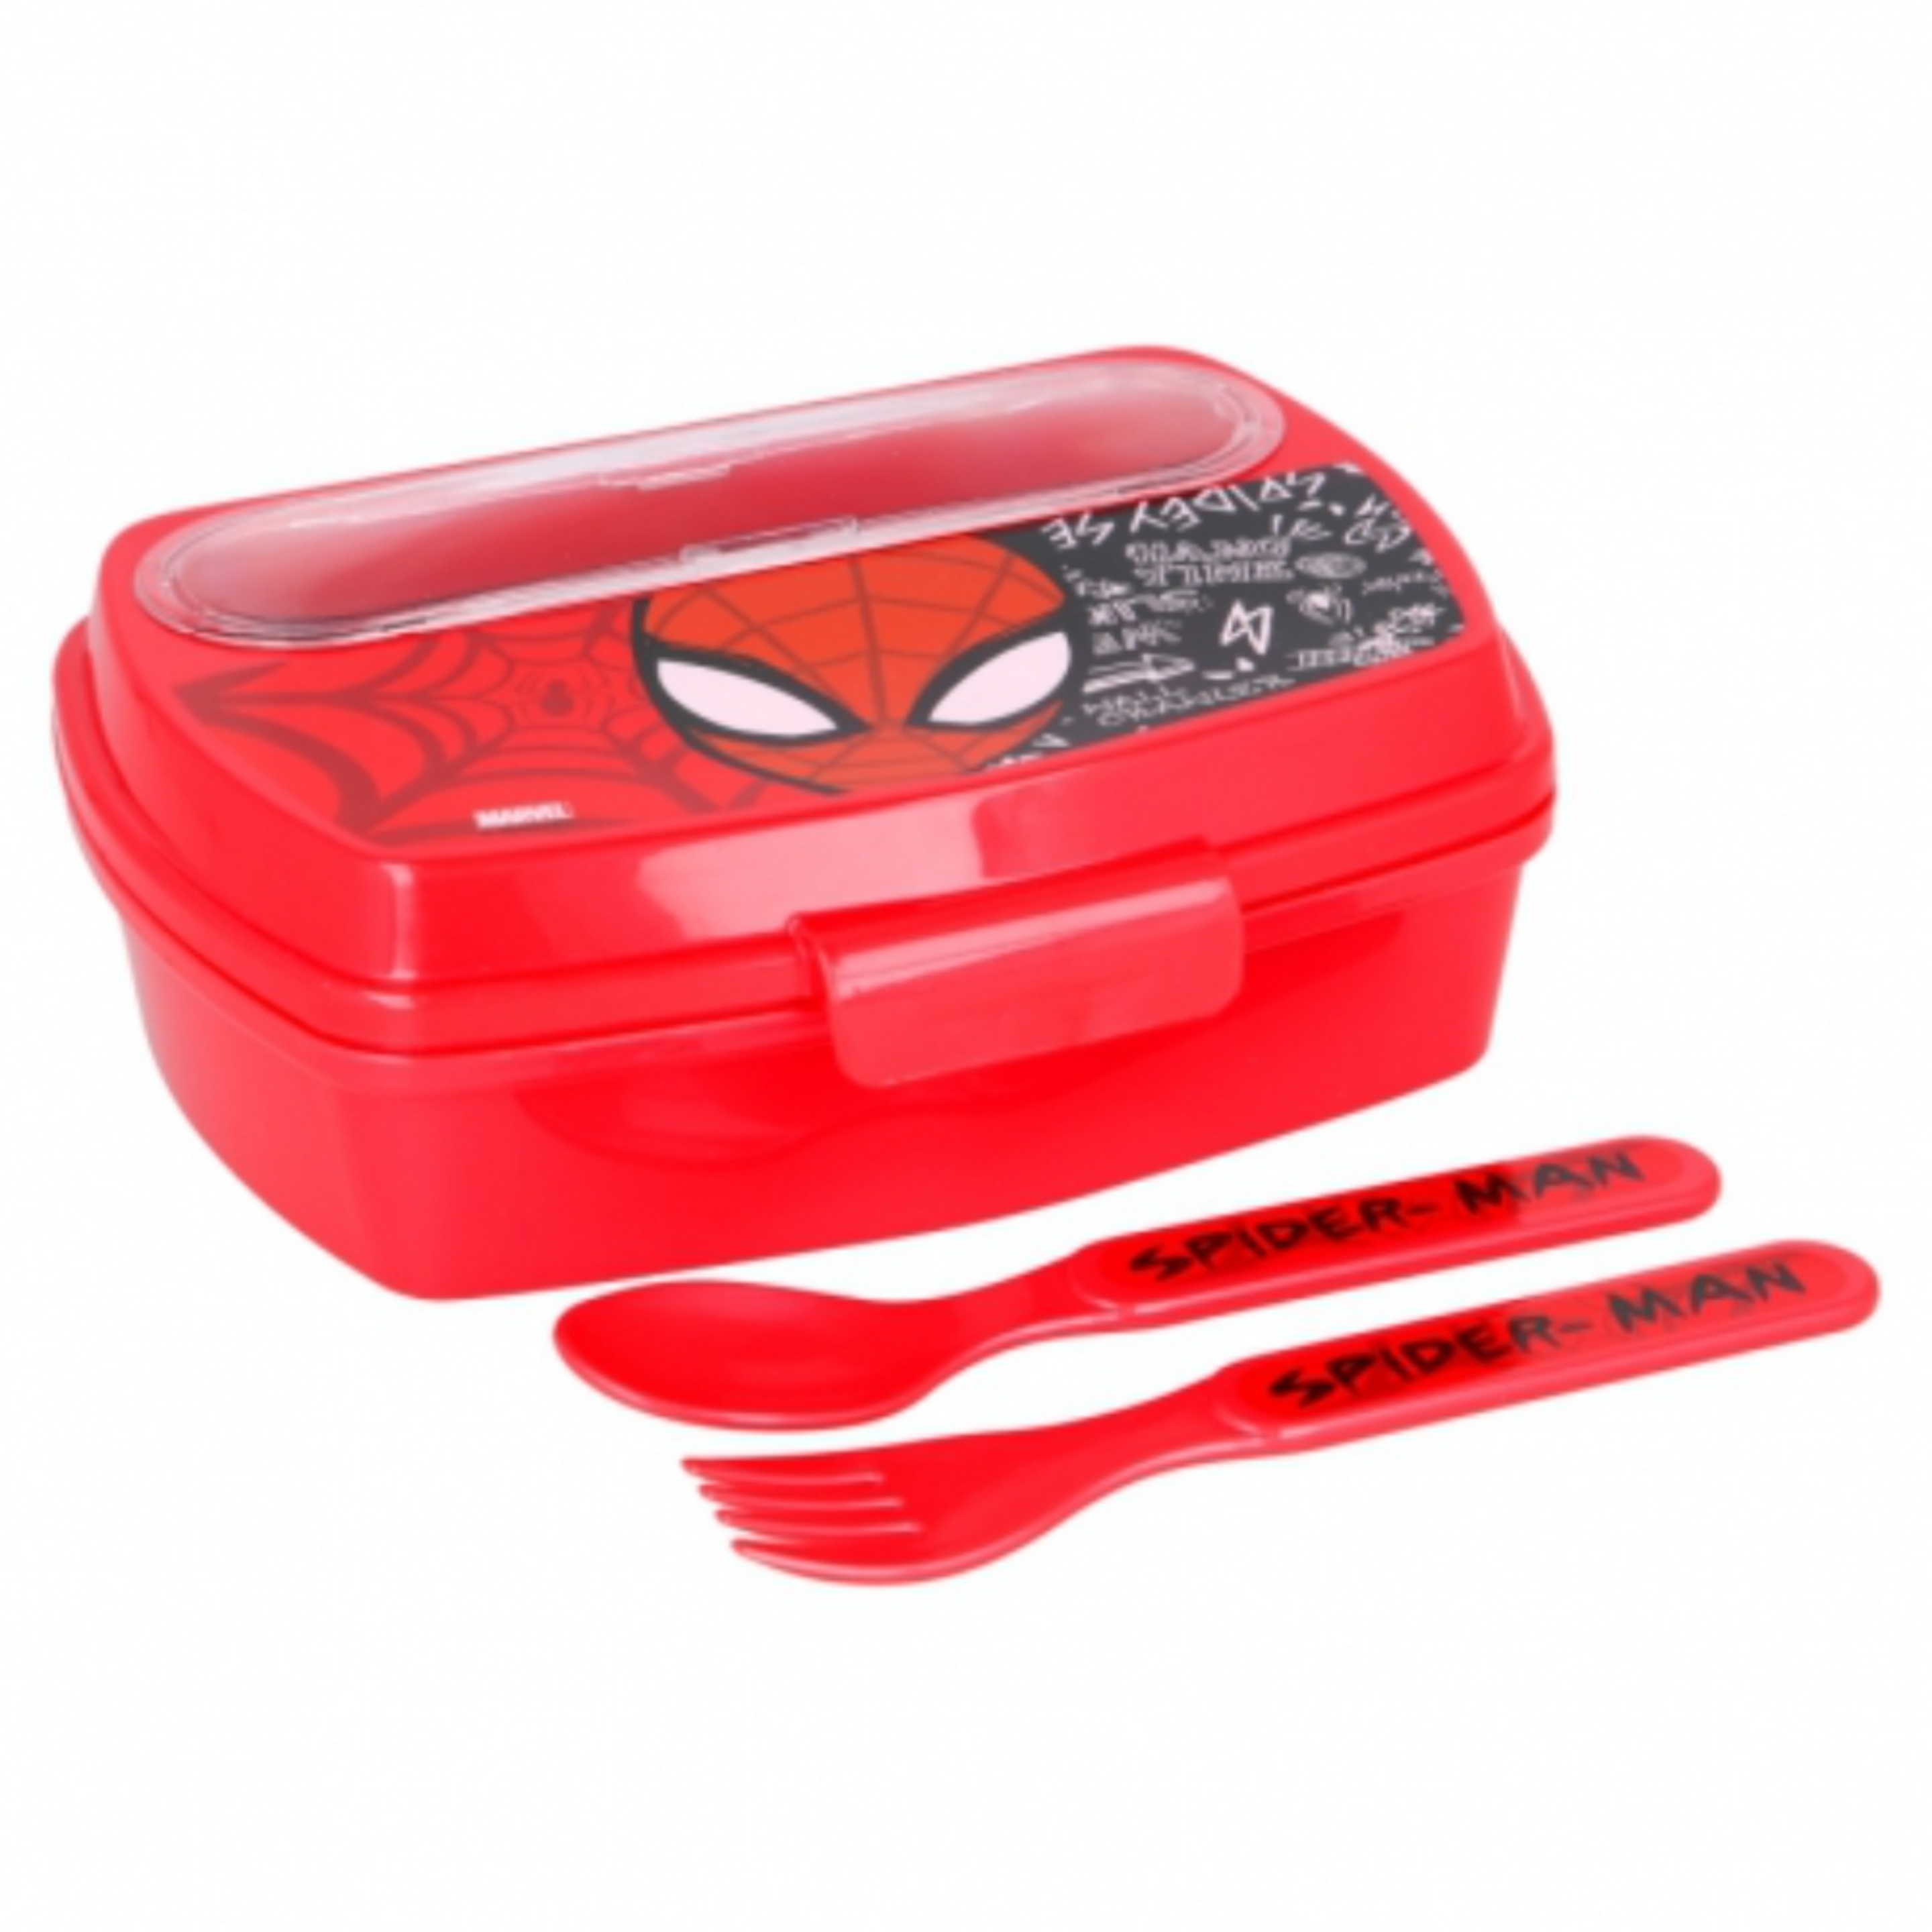 Sandwichera Spiderman 65725 - rojo - 